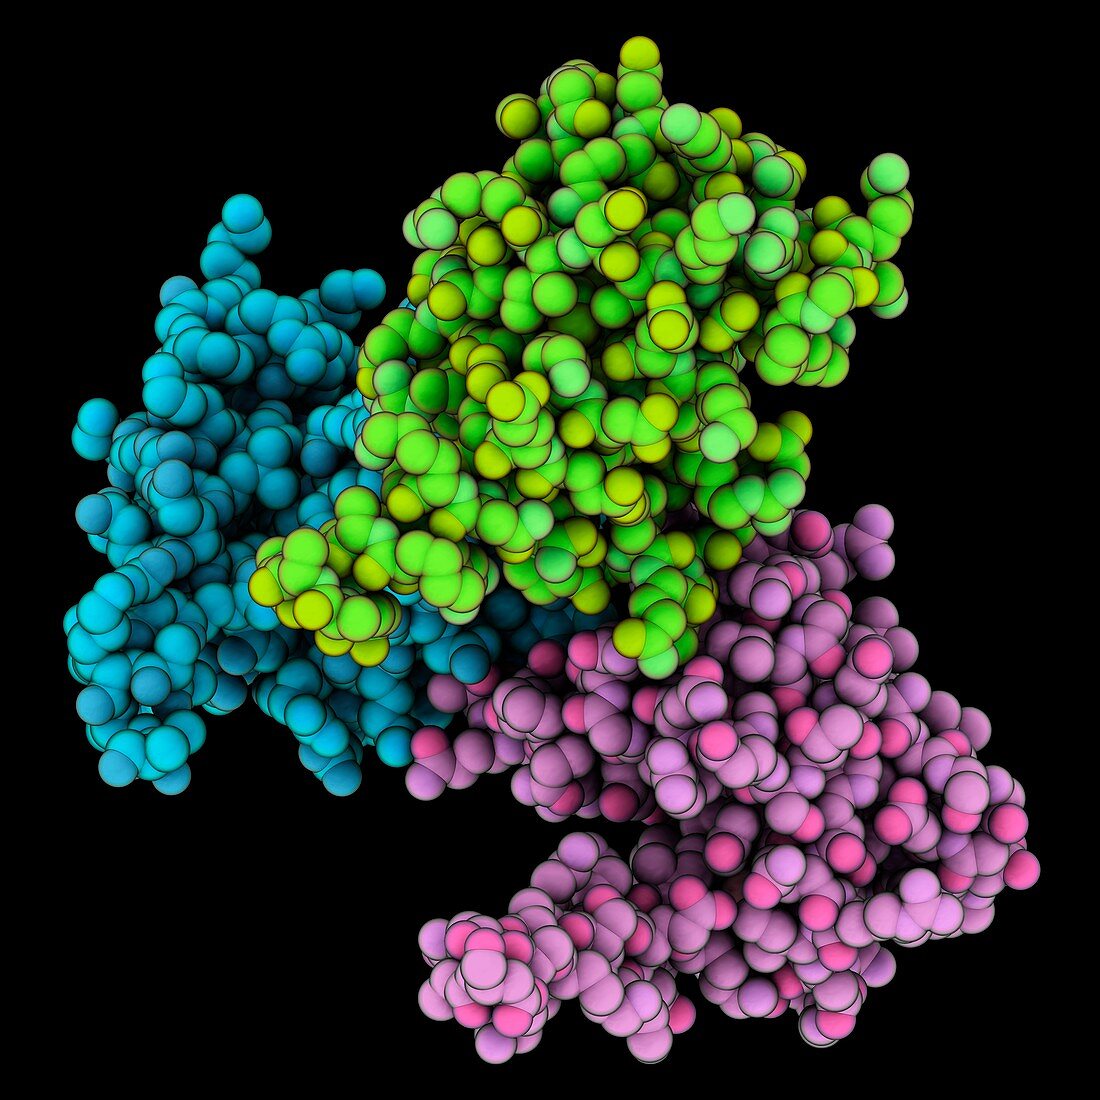 Trimeric HIV-1 matrix protein